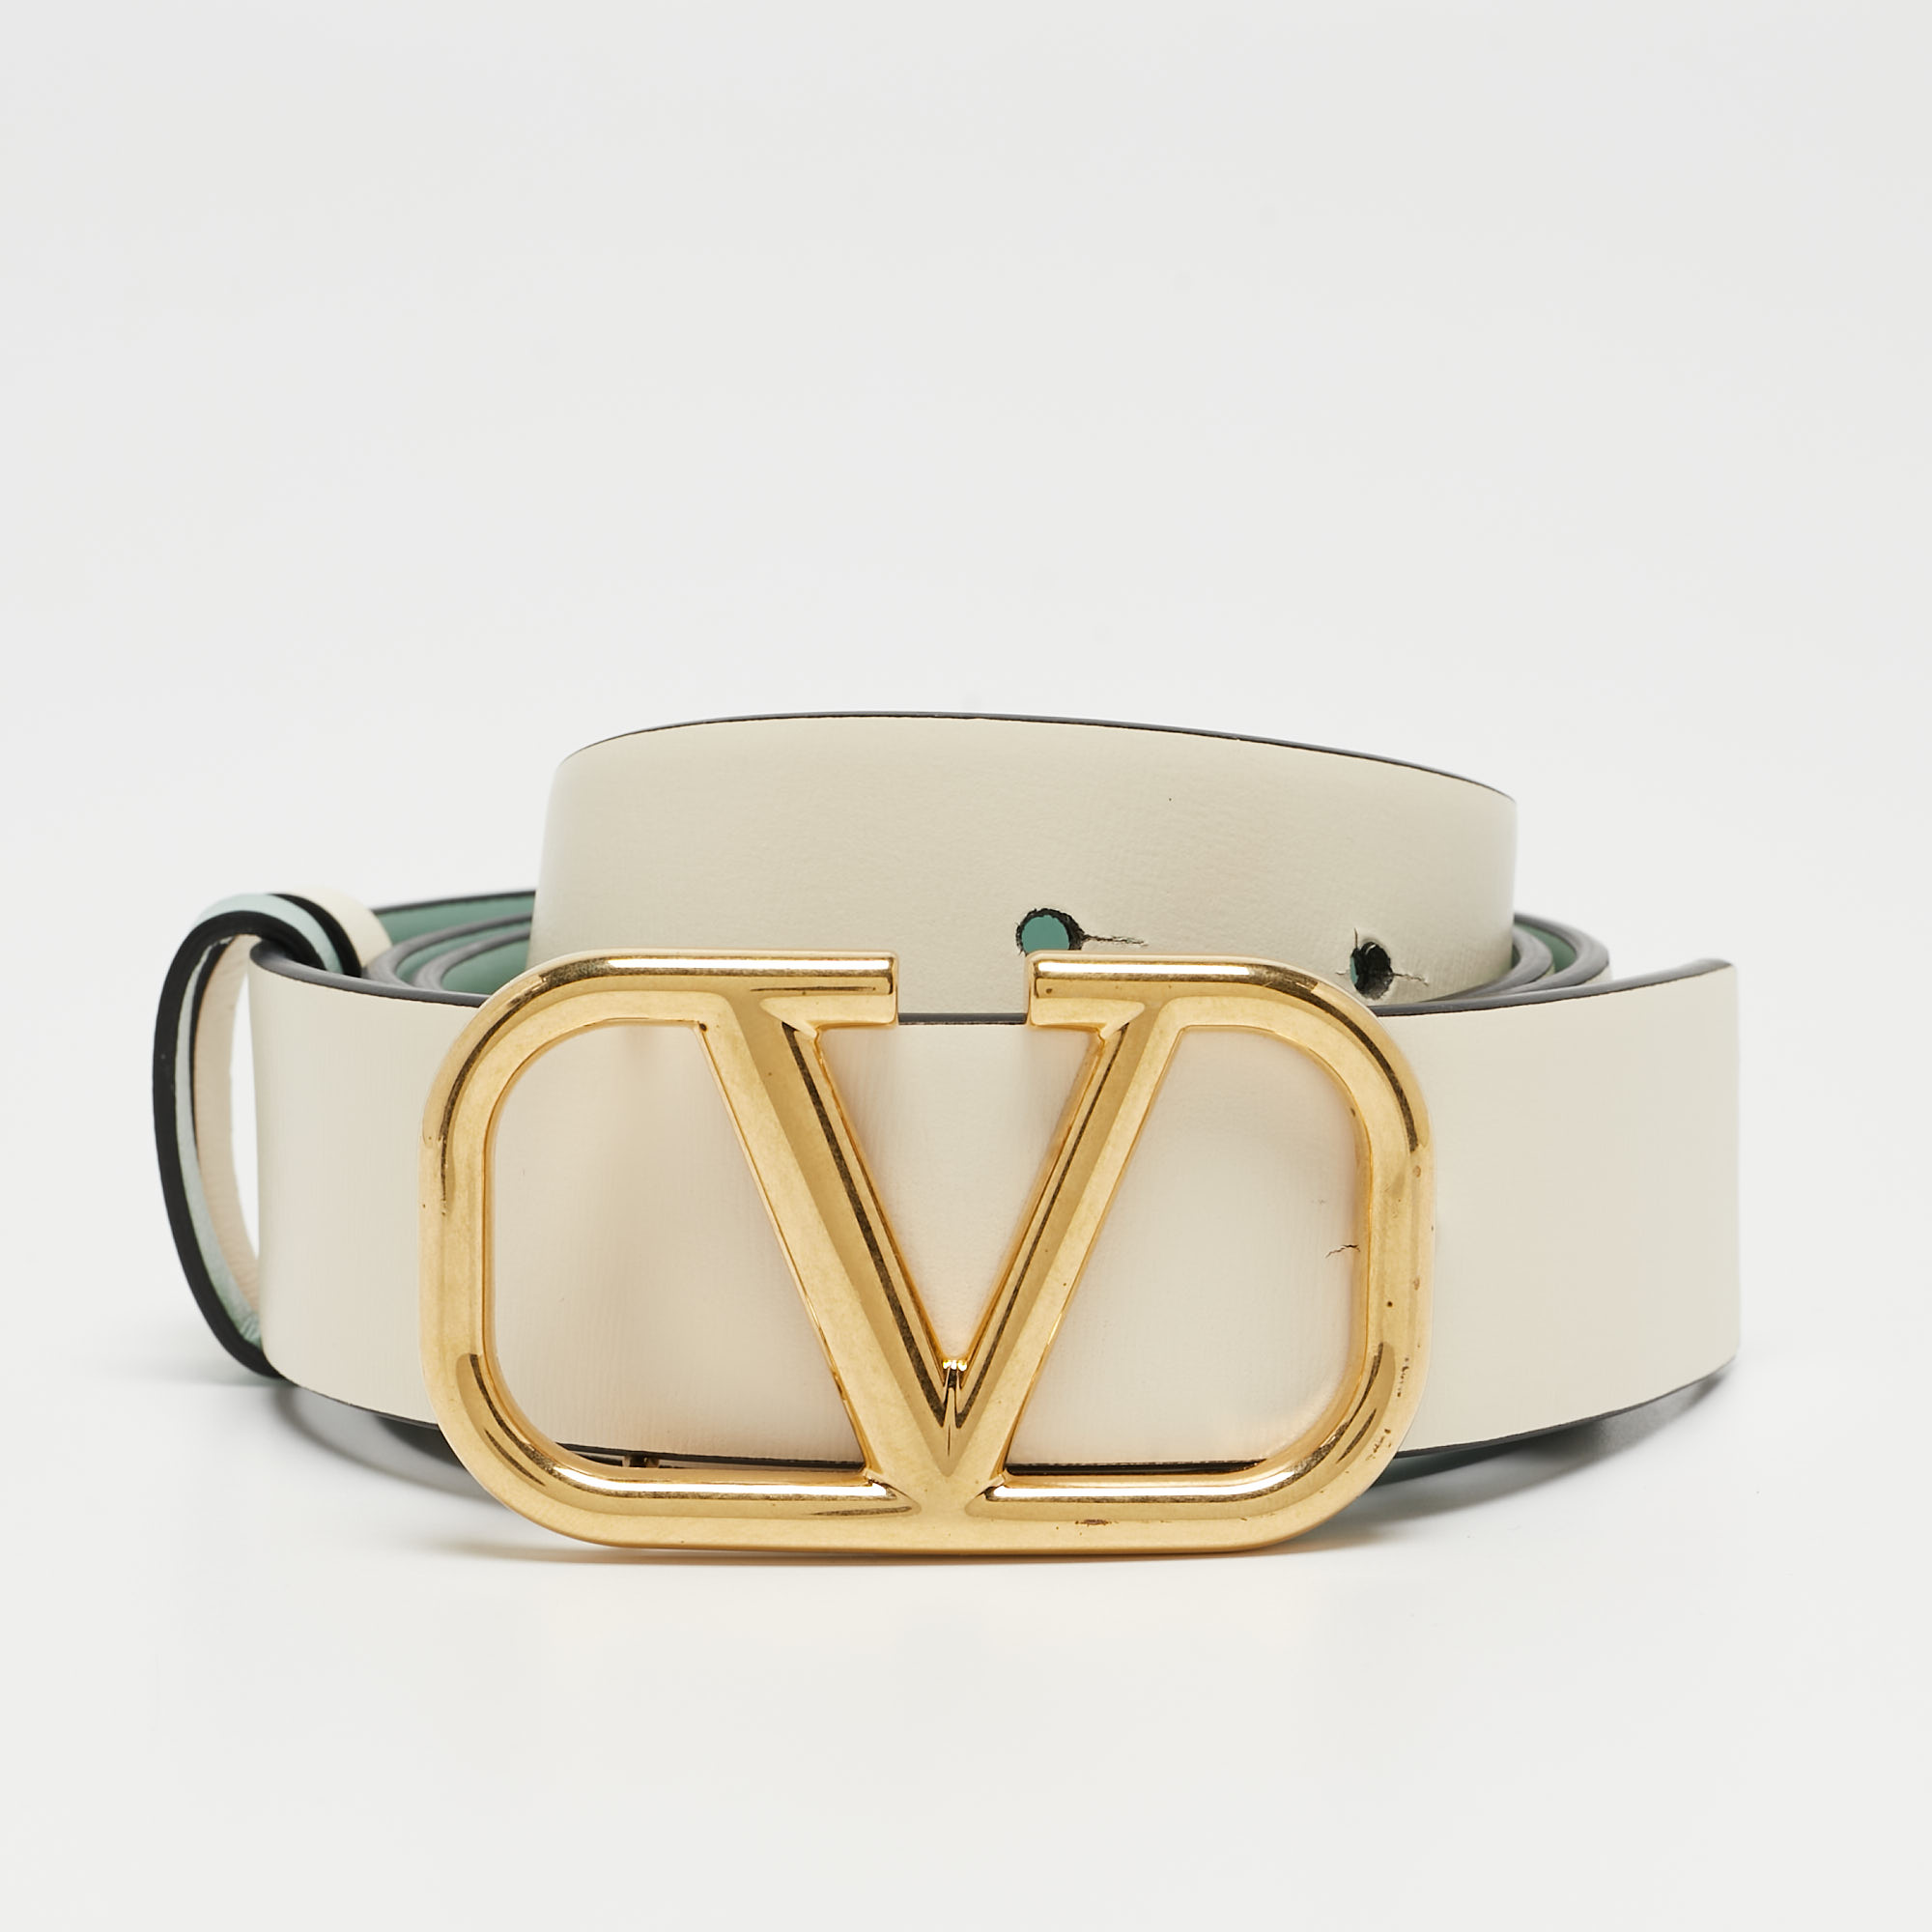 Valentino Mint Green/Cream Leather VLogo Reversible Belt 80 CM